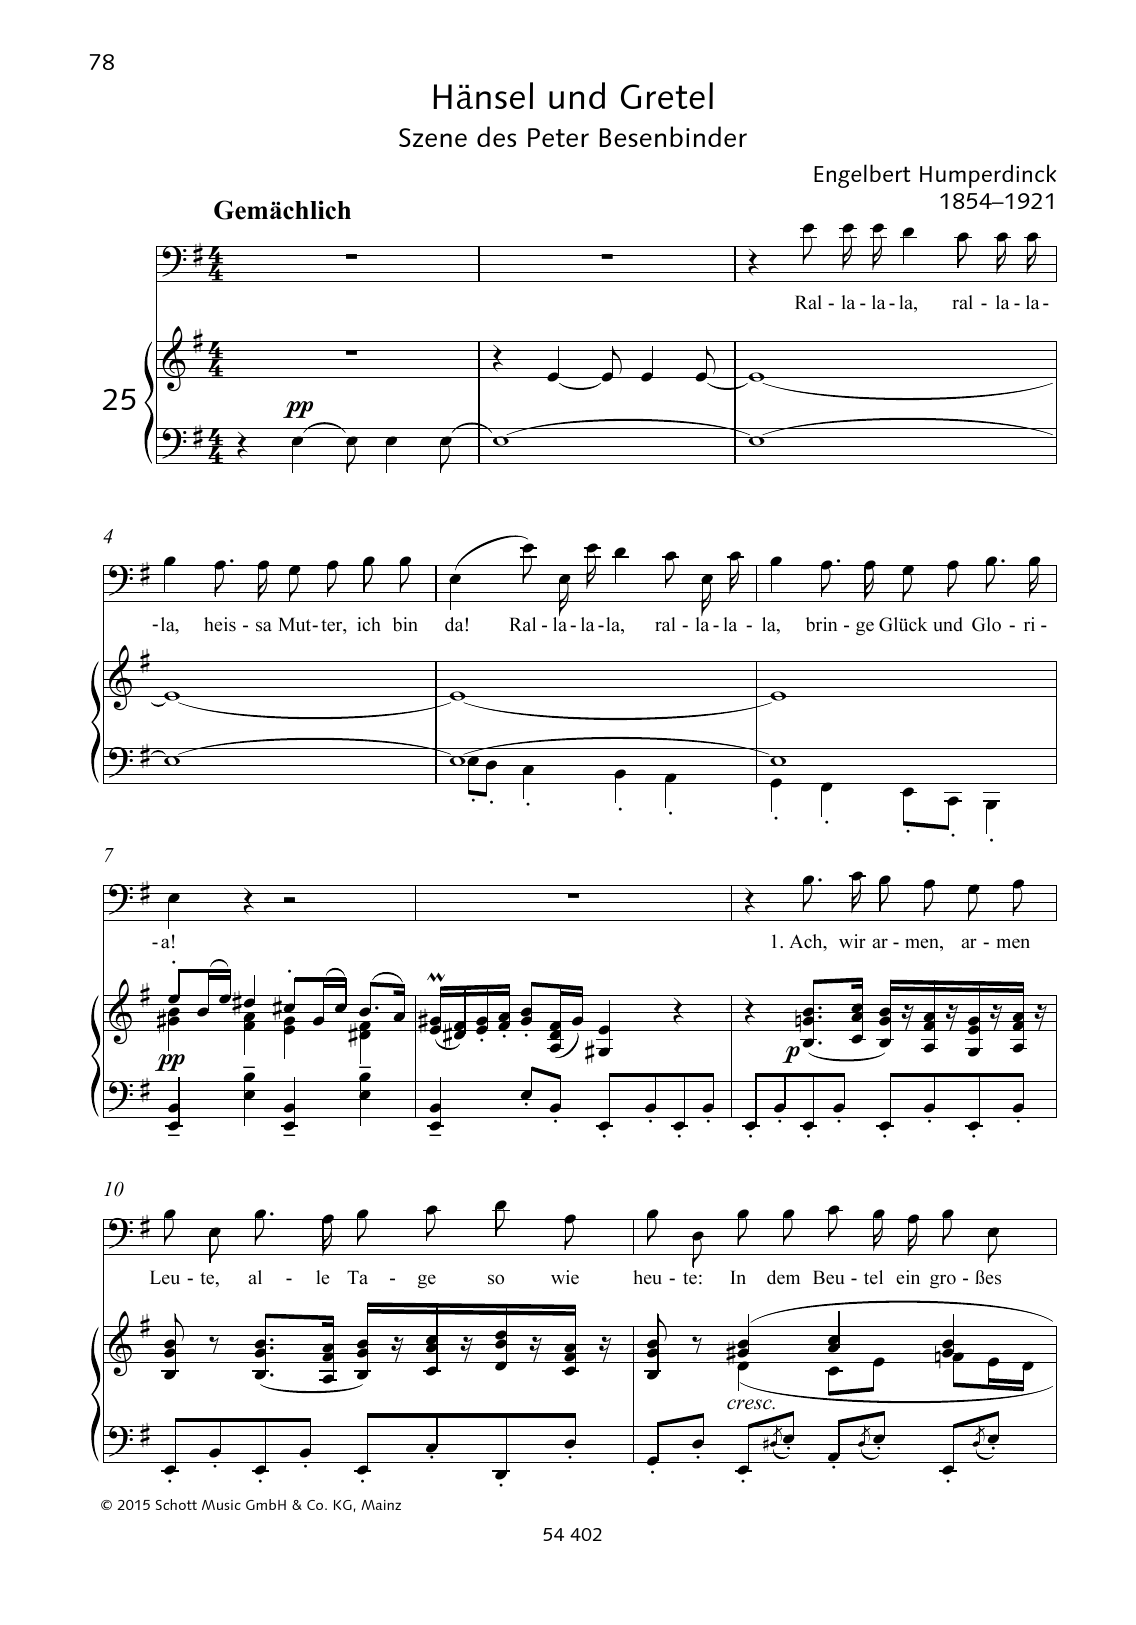 Wolfgang Birtel Rallala, heissa Mutter / Ach, wir armen, armen Leute Sheet Music Notes & Chords for Piano & Vocal - Download or Print PDF